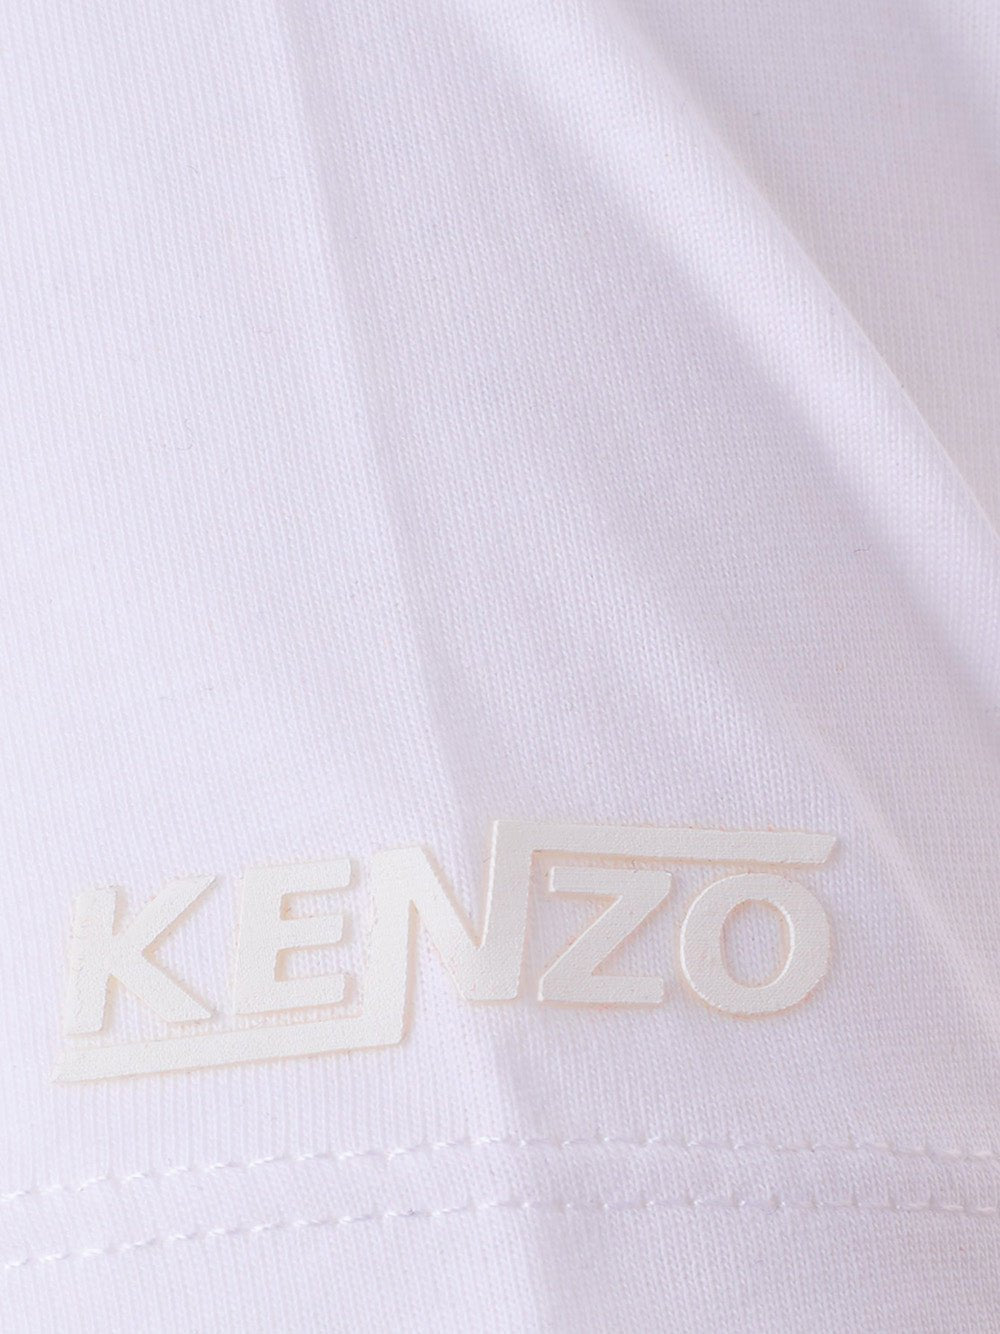 Fashionsarah.com Fashionsarah.com Kenzo Red Cotton T-Shirt with Contrasting White Sleeves